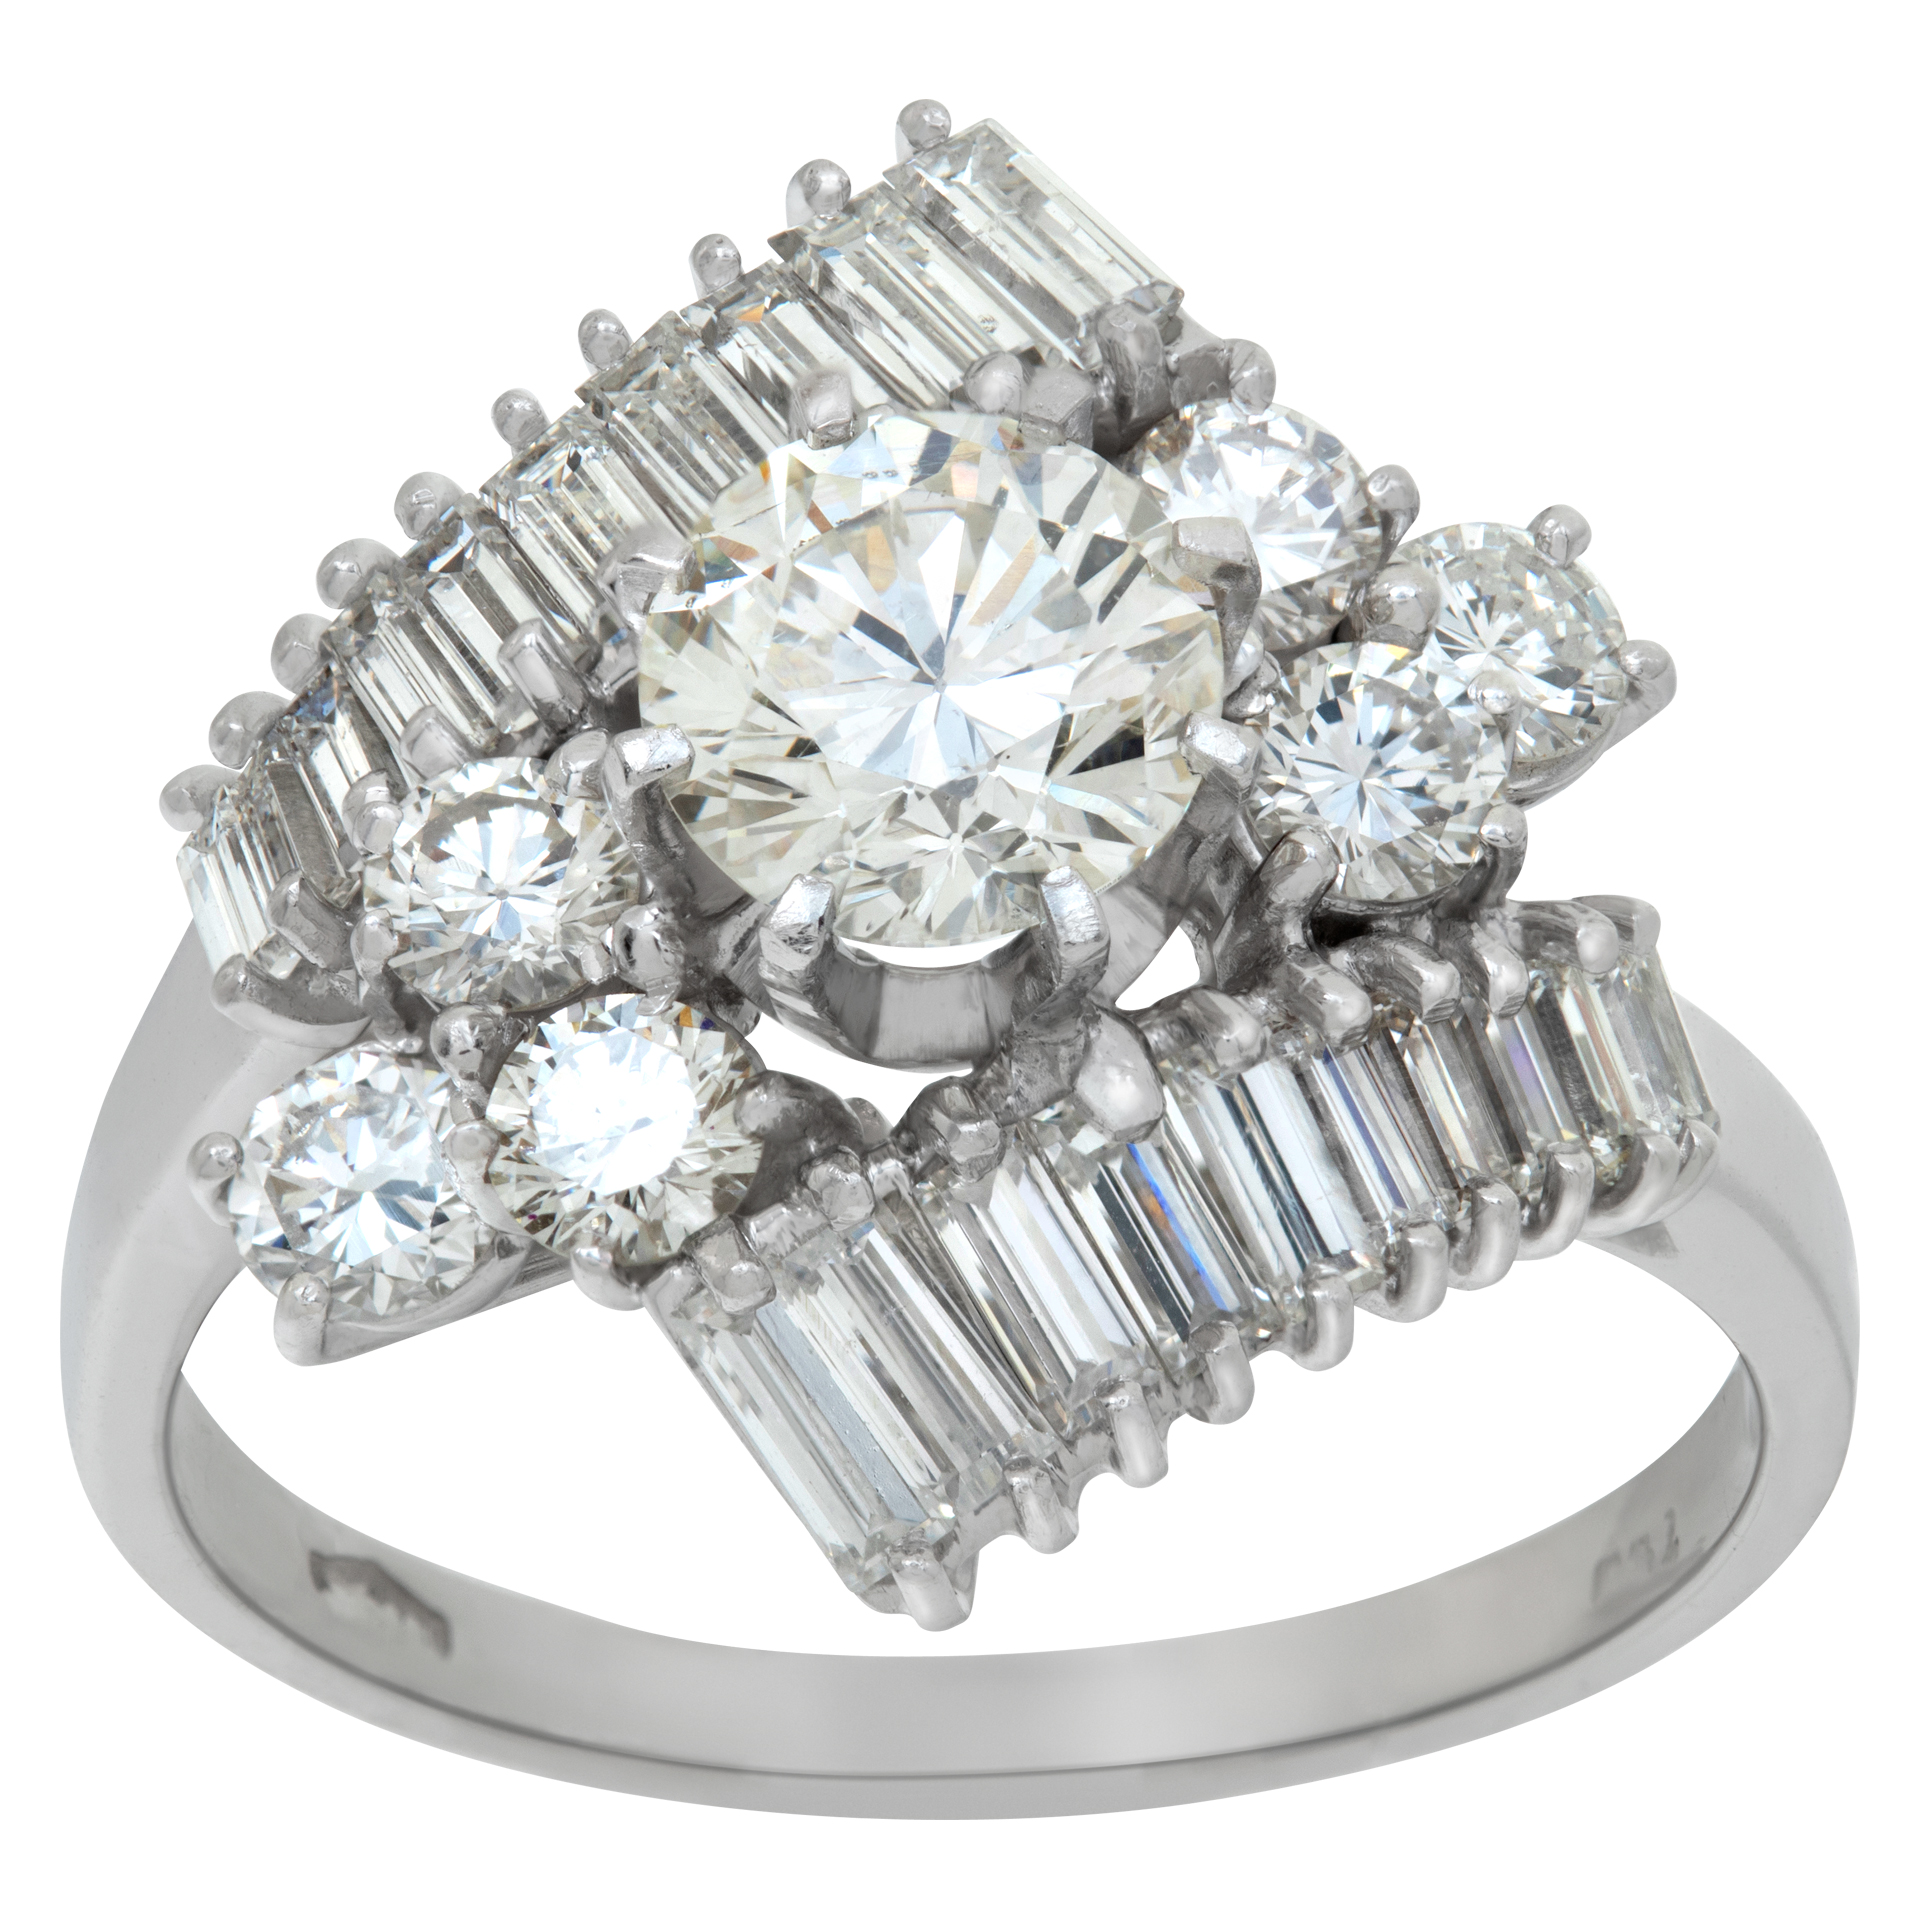 GIA certified round brilliant cut diamond 1.04 carat (K color, I1 clarity) image 1